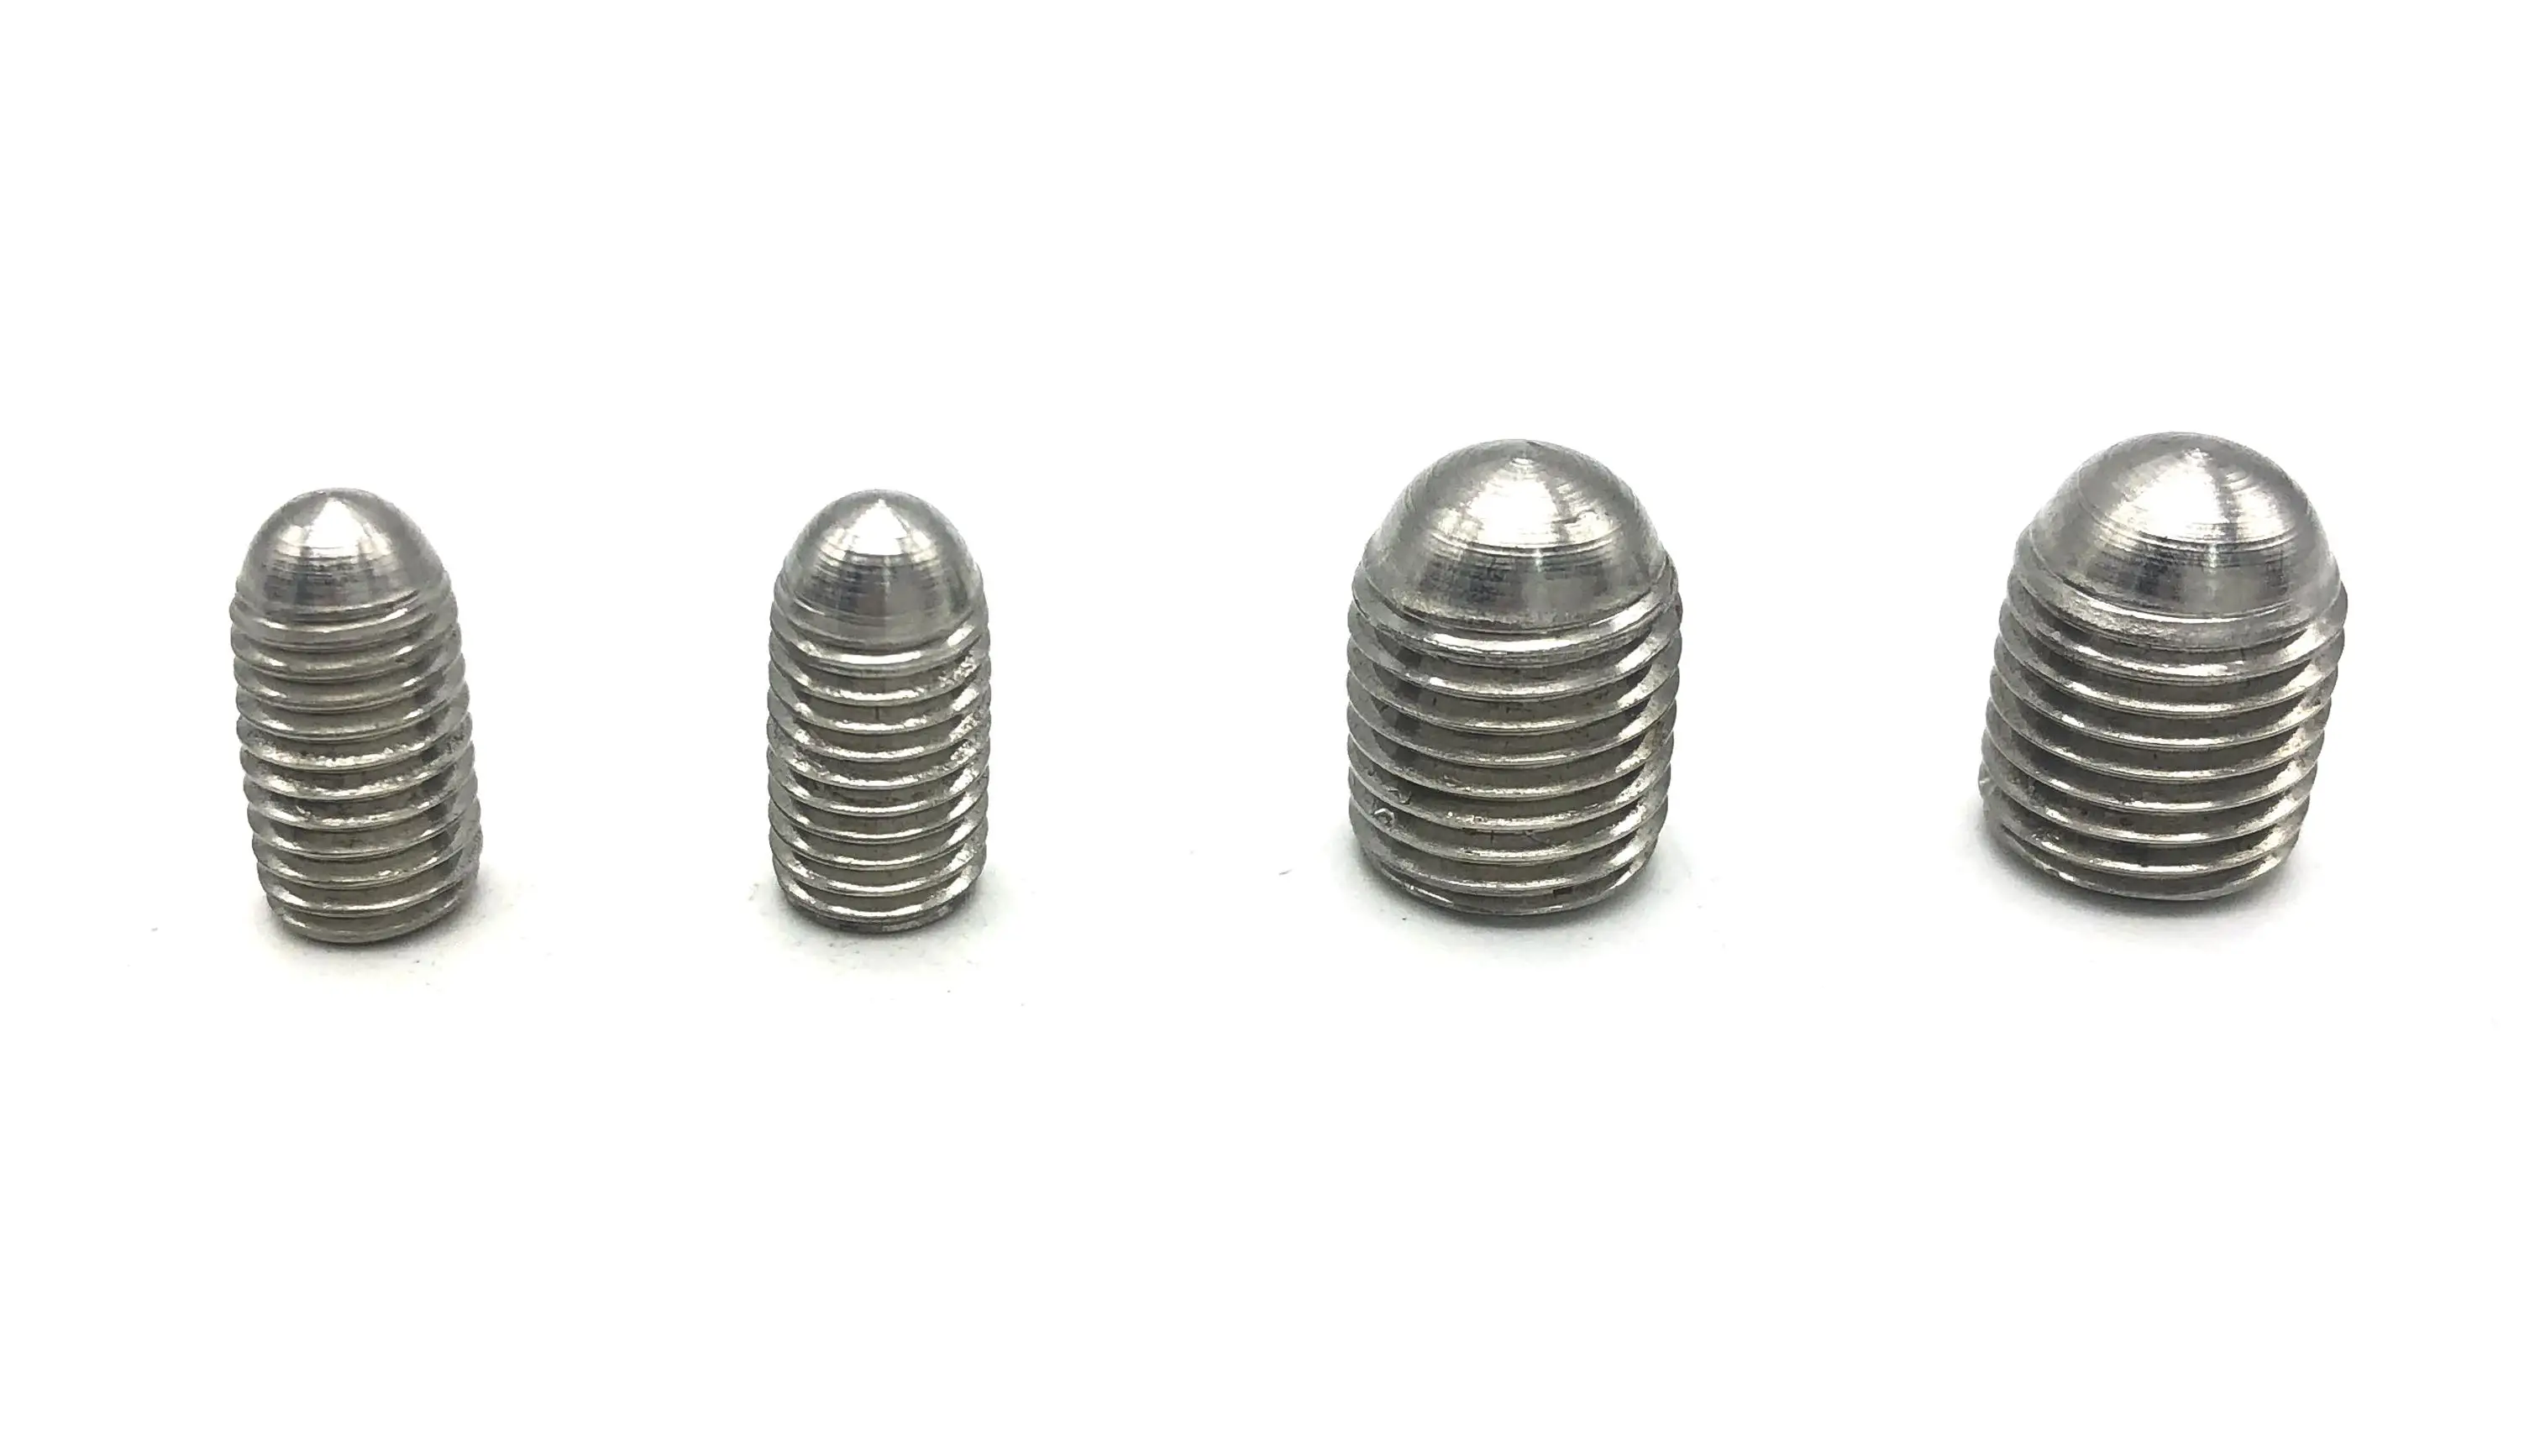 Socket set screw 304 stainless steel m3 m4 m5 m6 m8 metric allen locking ball point socket head set screw